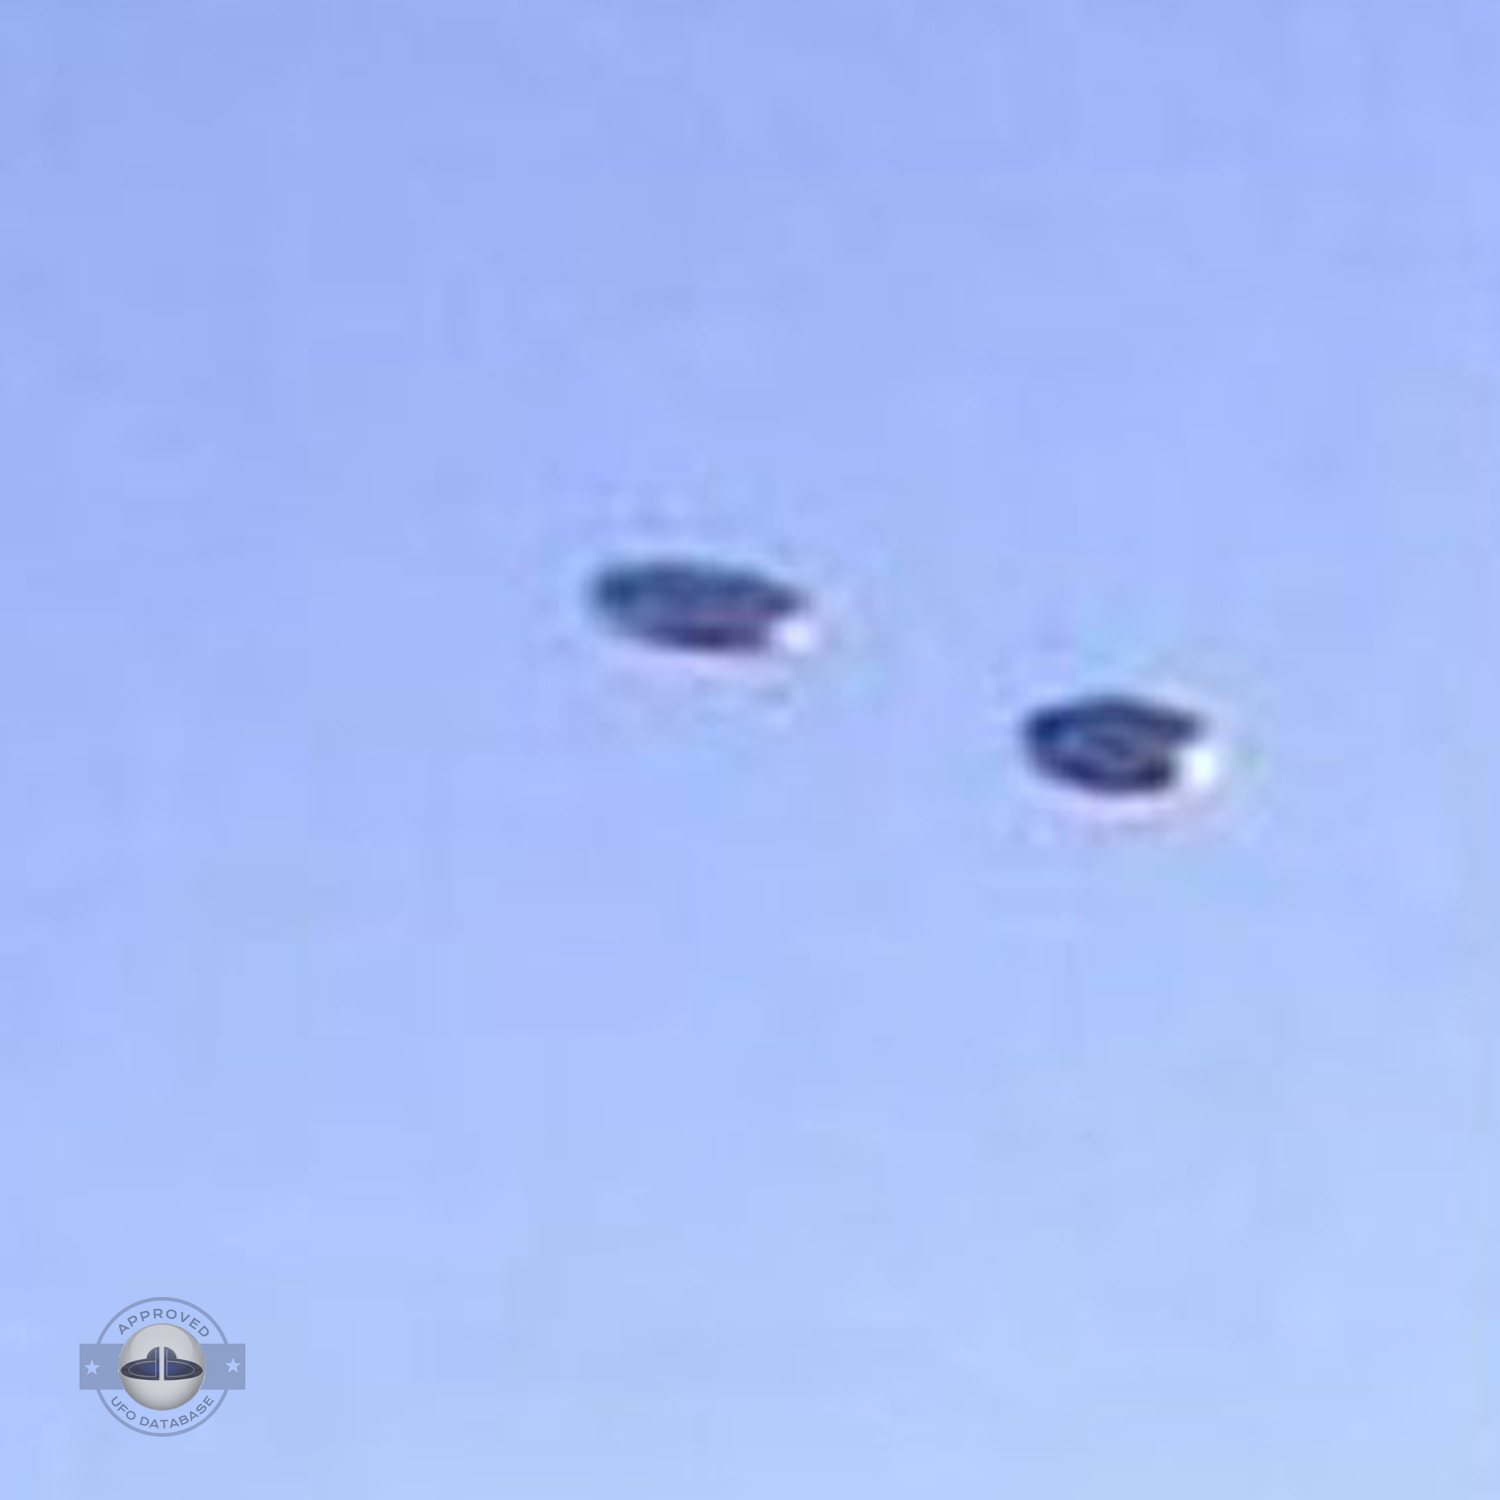 UFO over New Mexico - UFOdB.com - UFO pictures UFO Picture #4-4